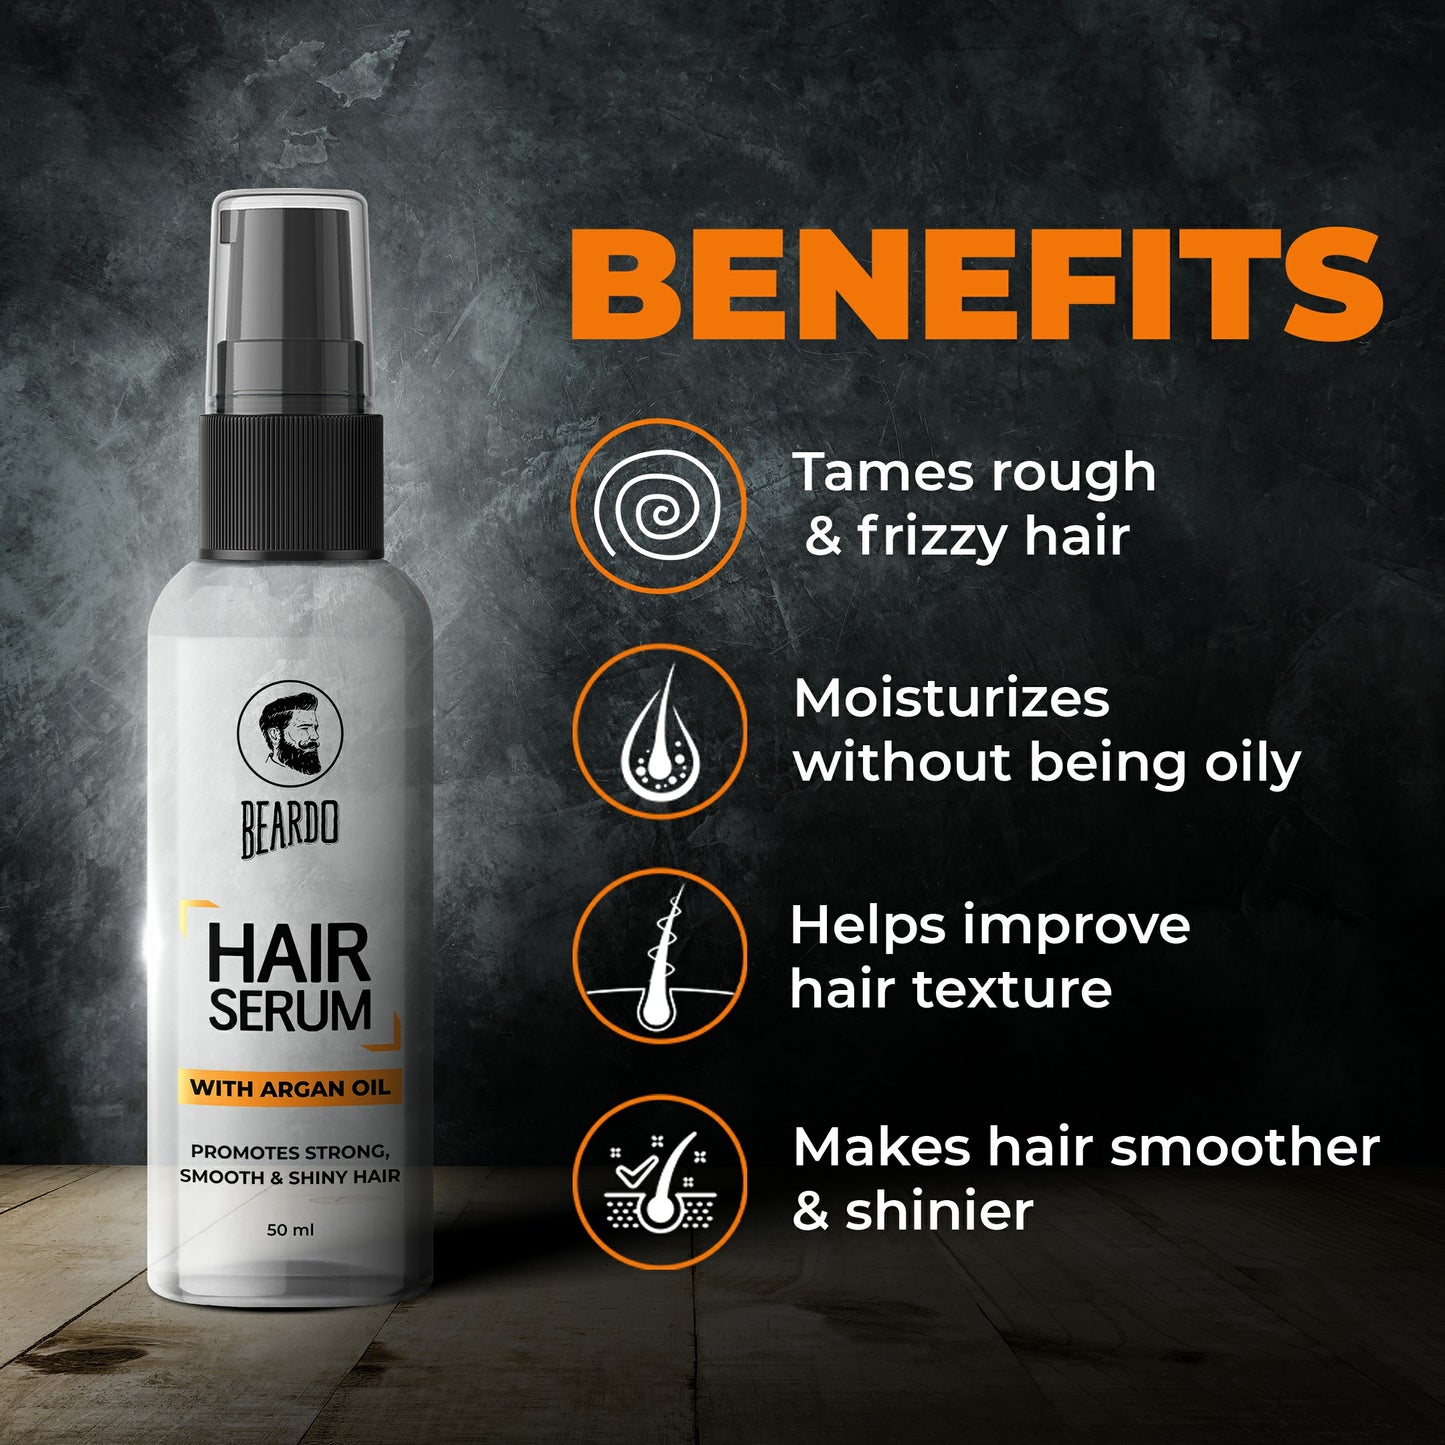 benefits of hair serum, beardo hair serum benefits, frizzy hair, dry hair, Is Beardo hair serum good?